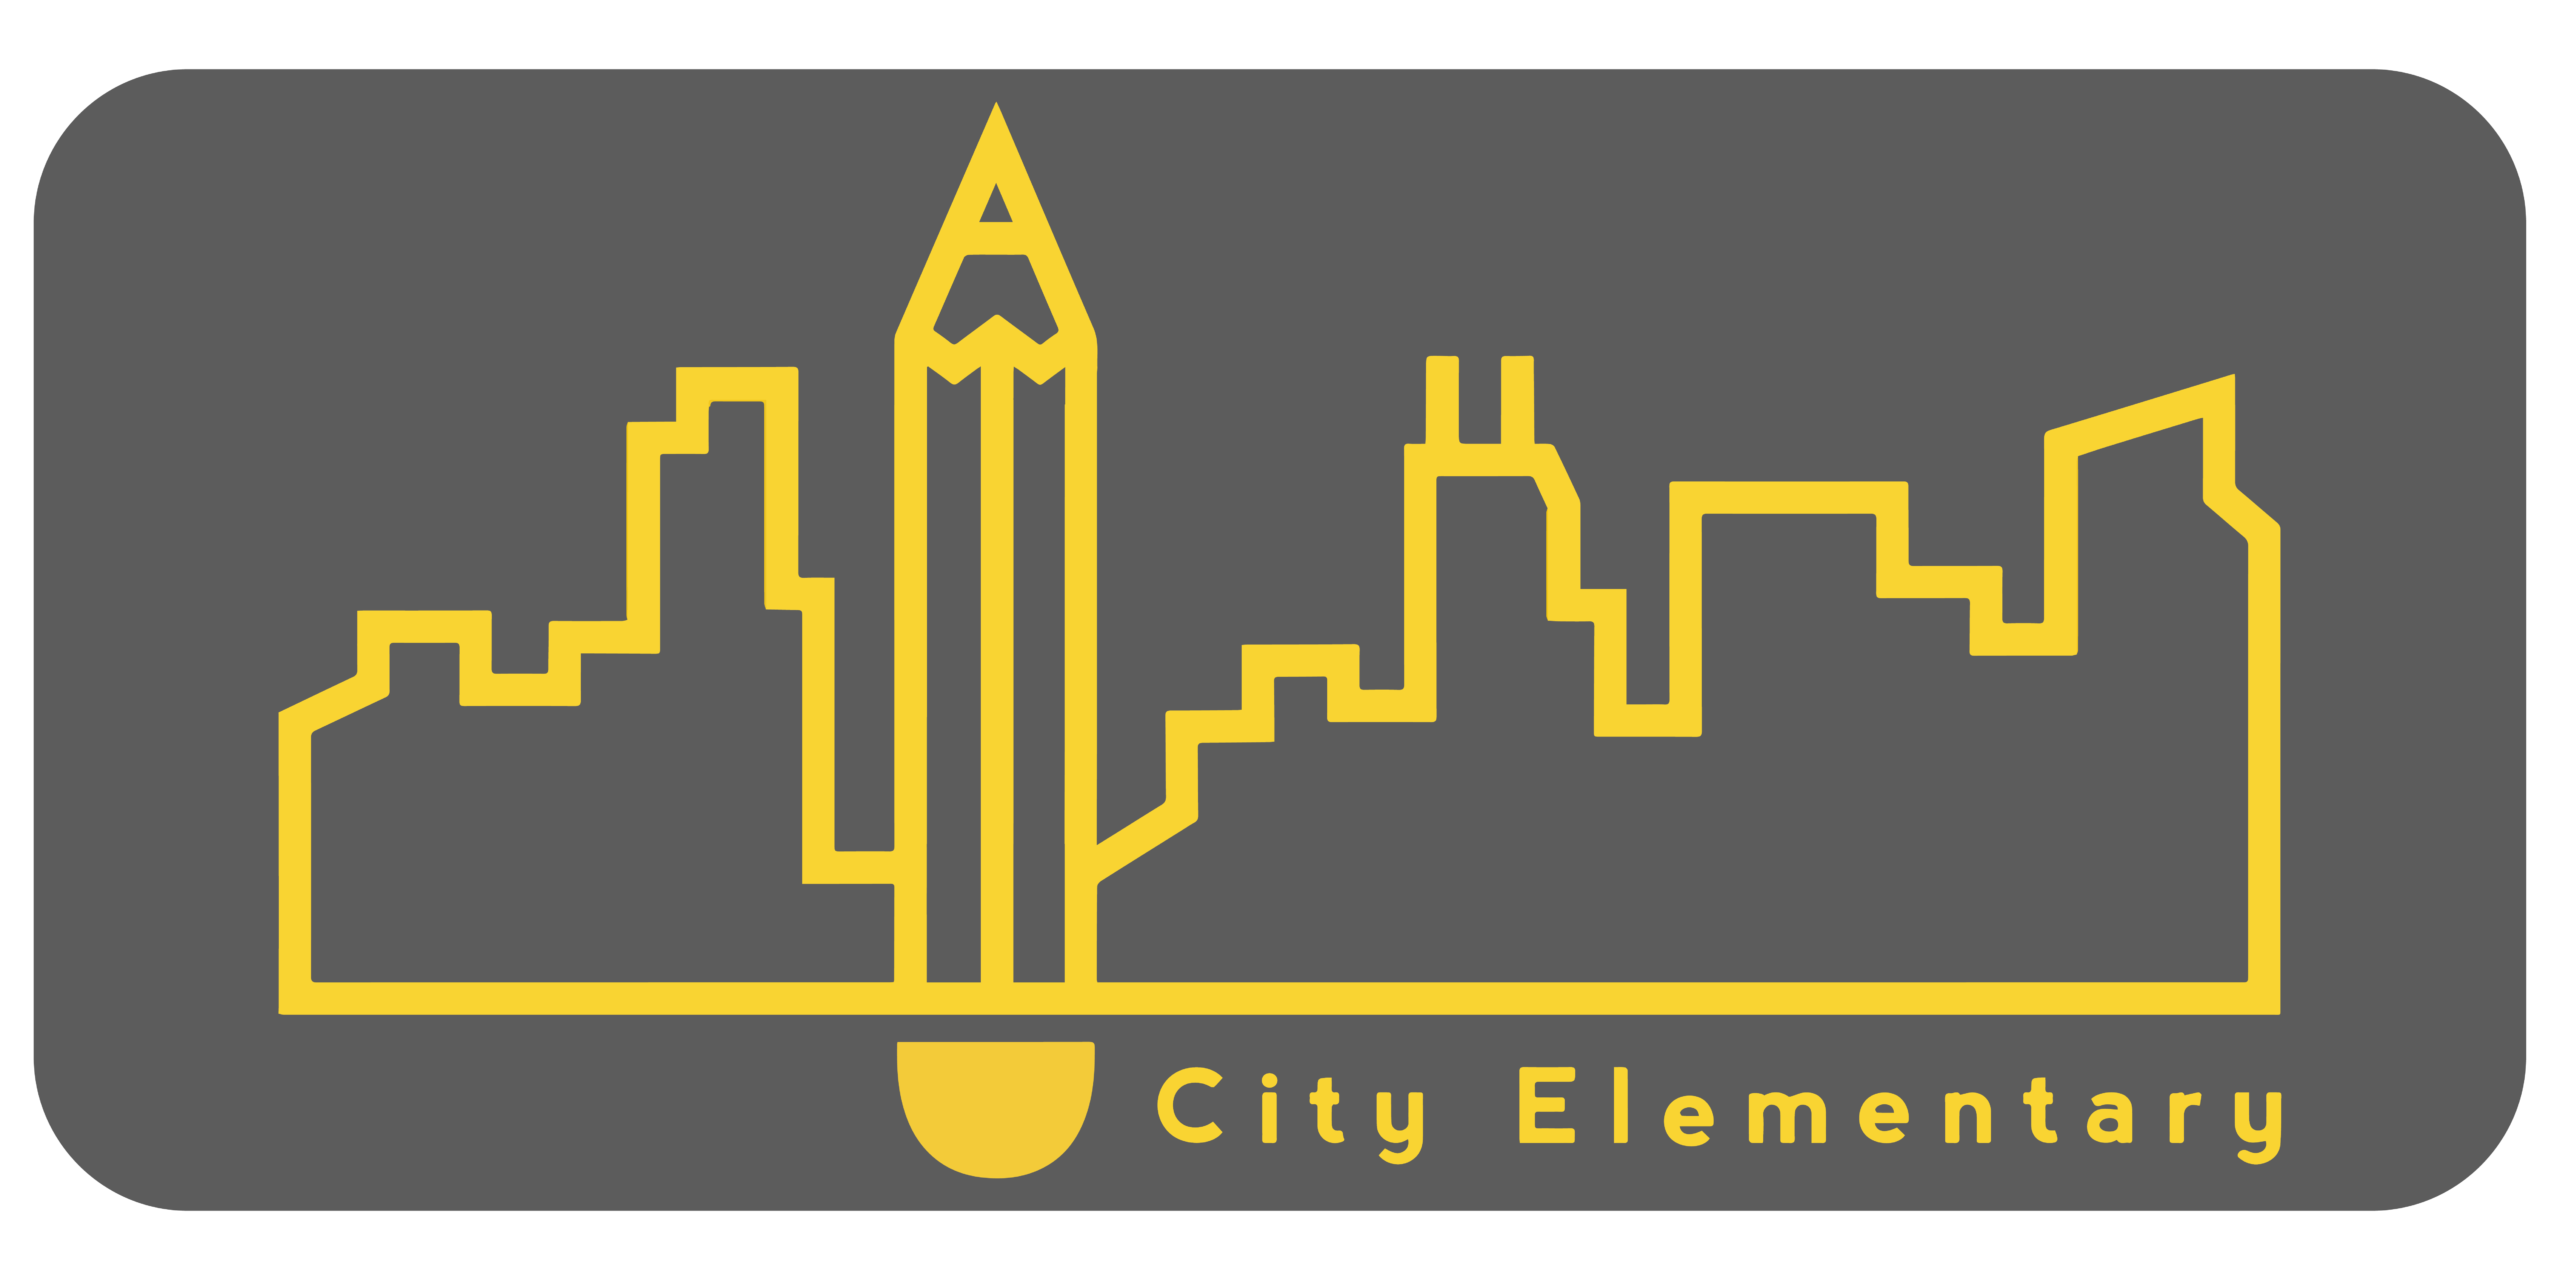 City Elementary